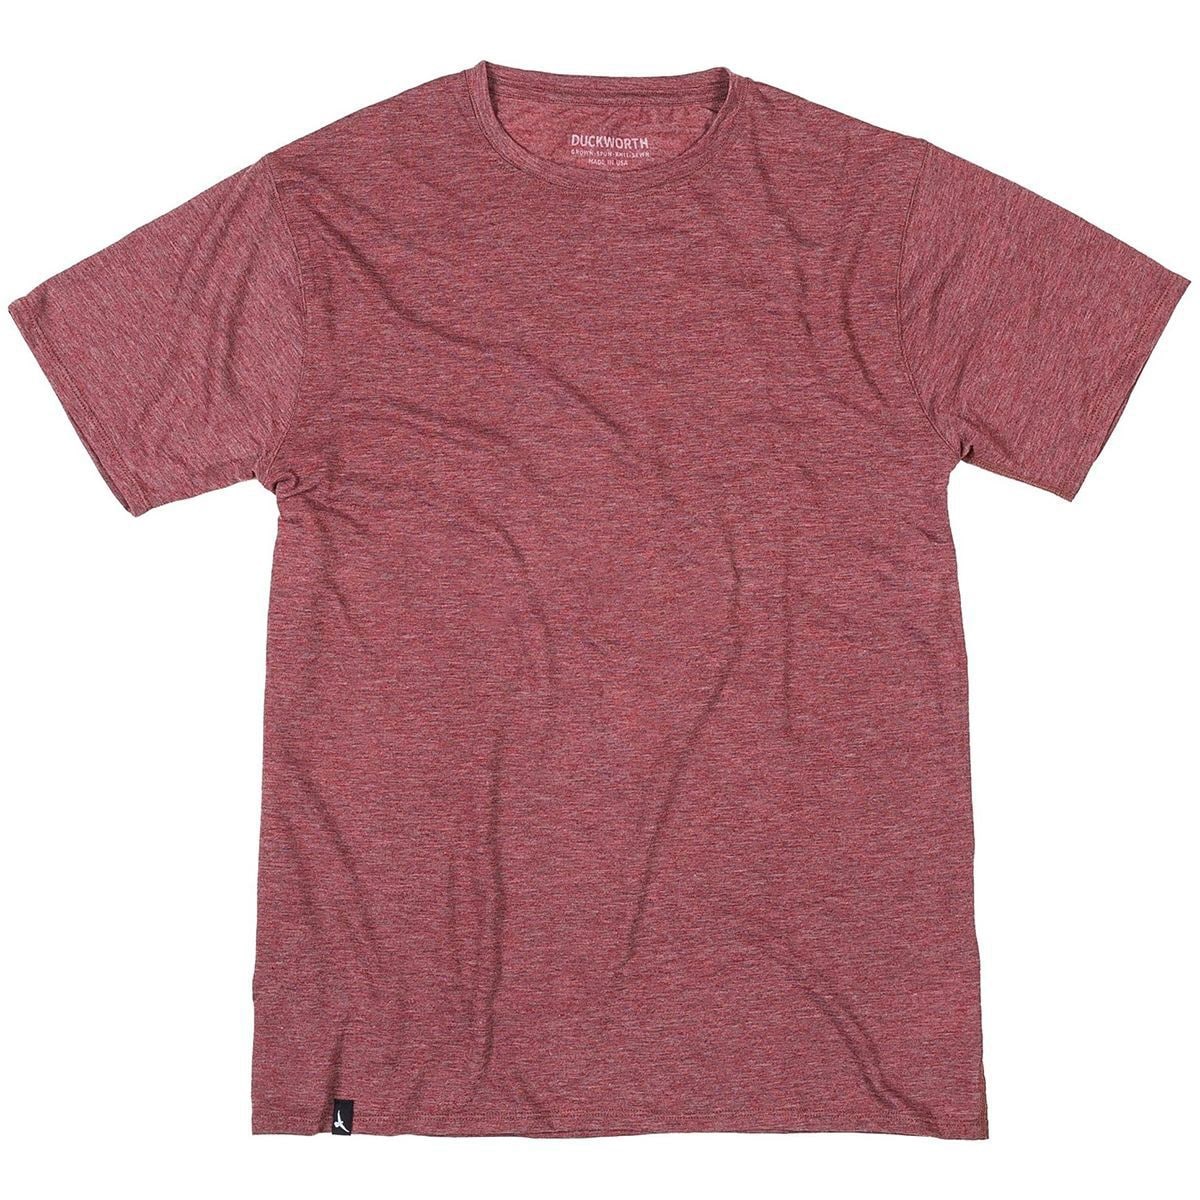 Duckworth Vapor Wool T-Shirt - Men's - Clothing